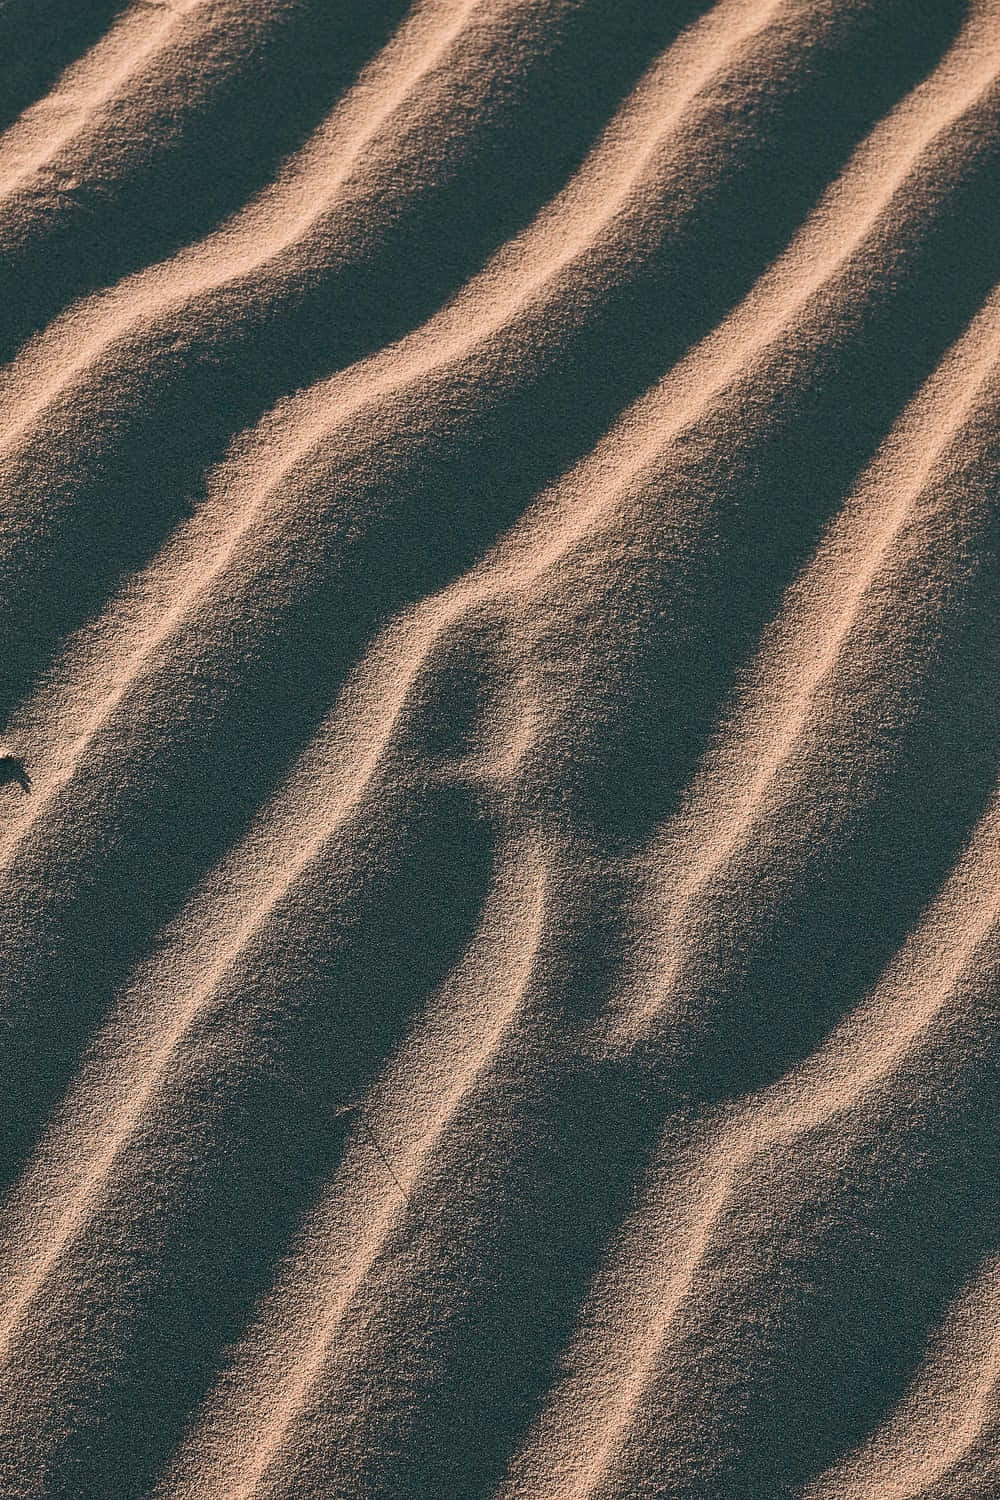 Desert Sand Wave Original Iphone 5s Background